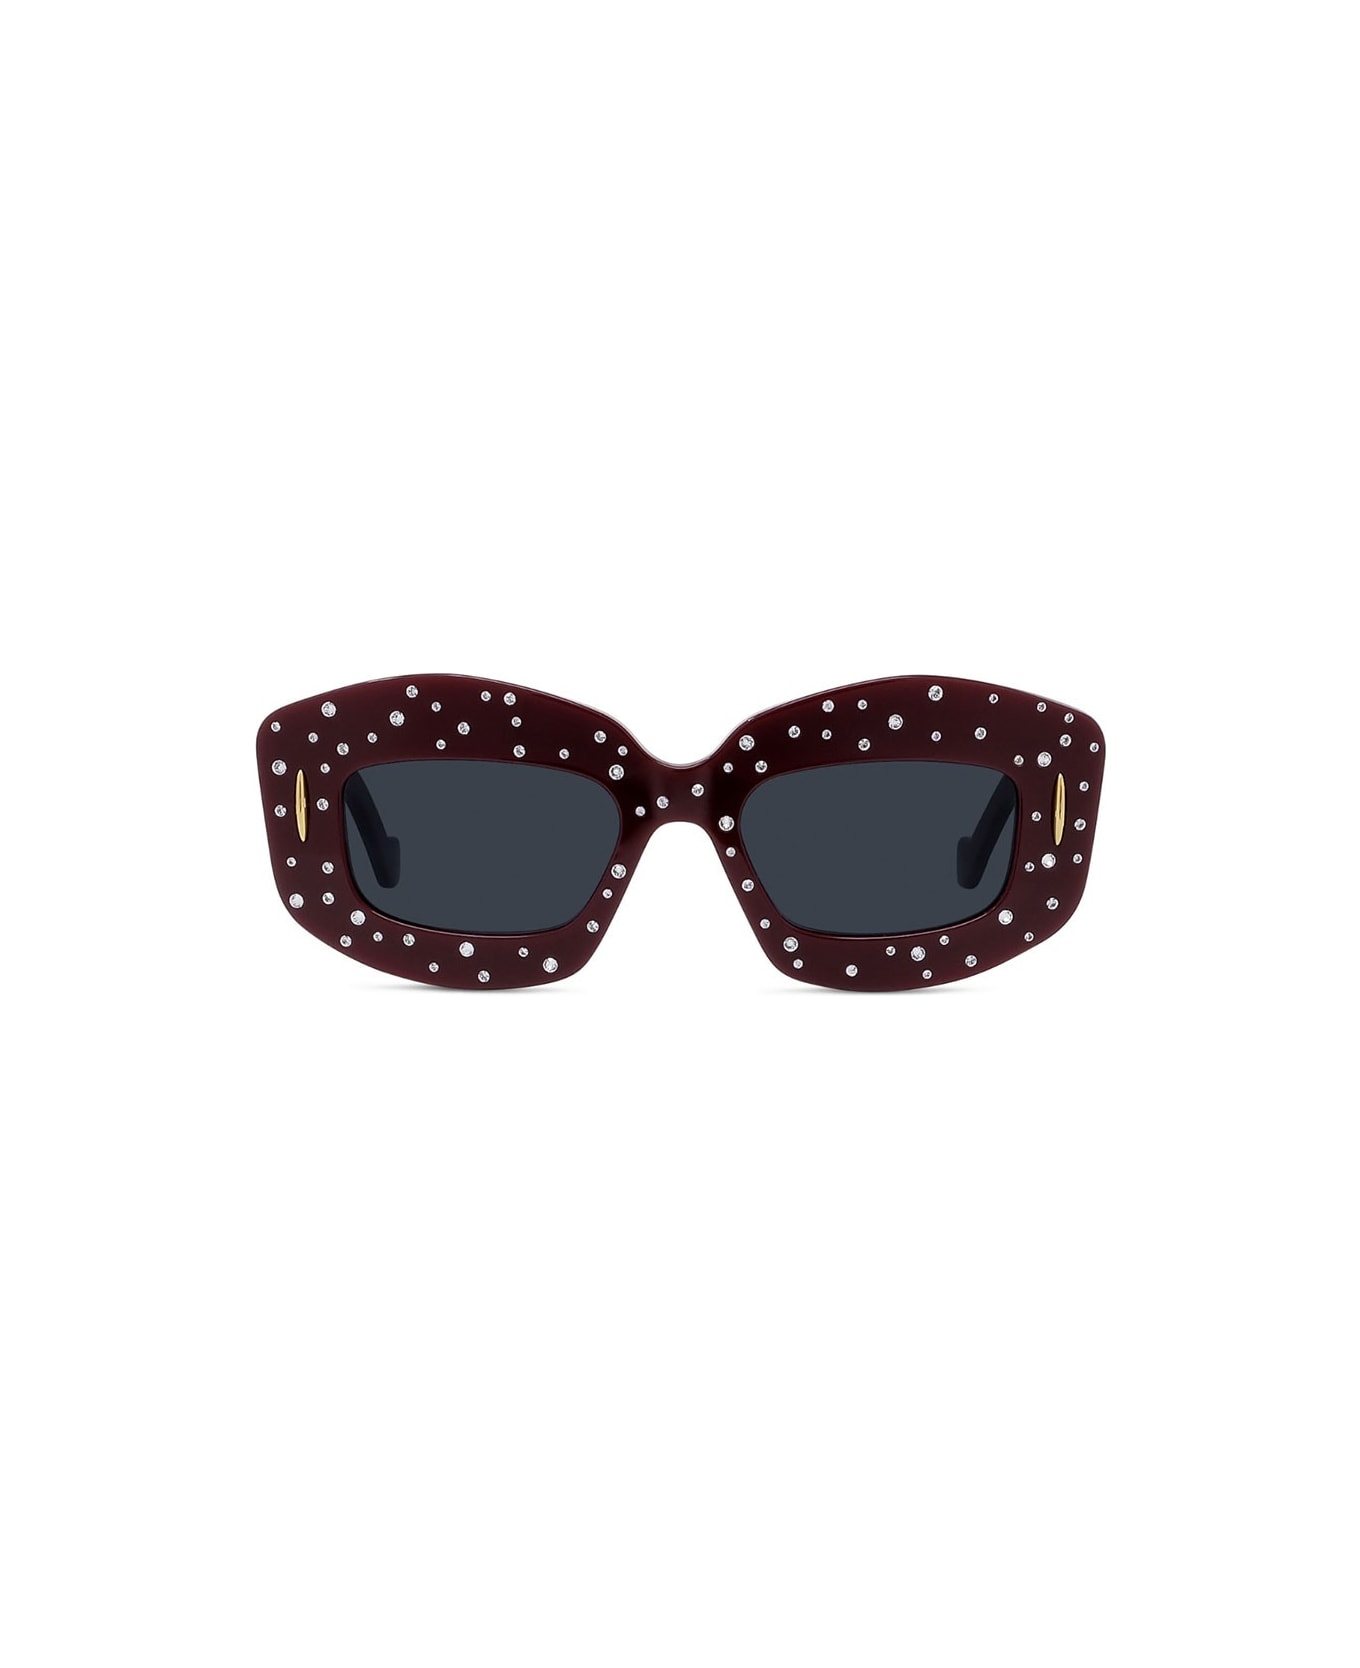 Loewe Sunglasses - Bordeaux/Grigio